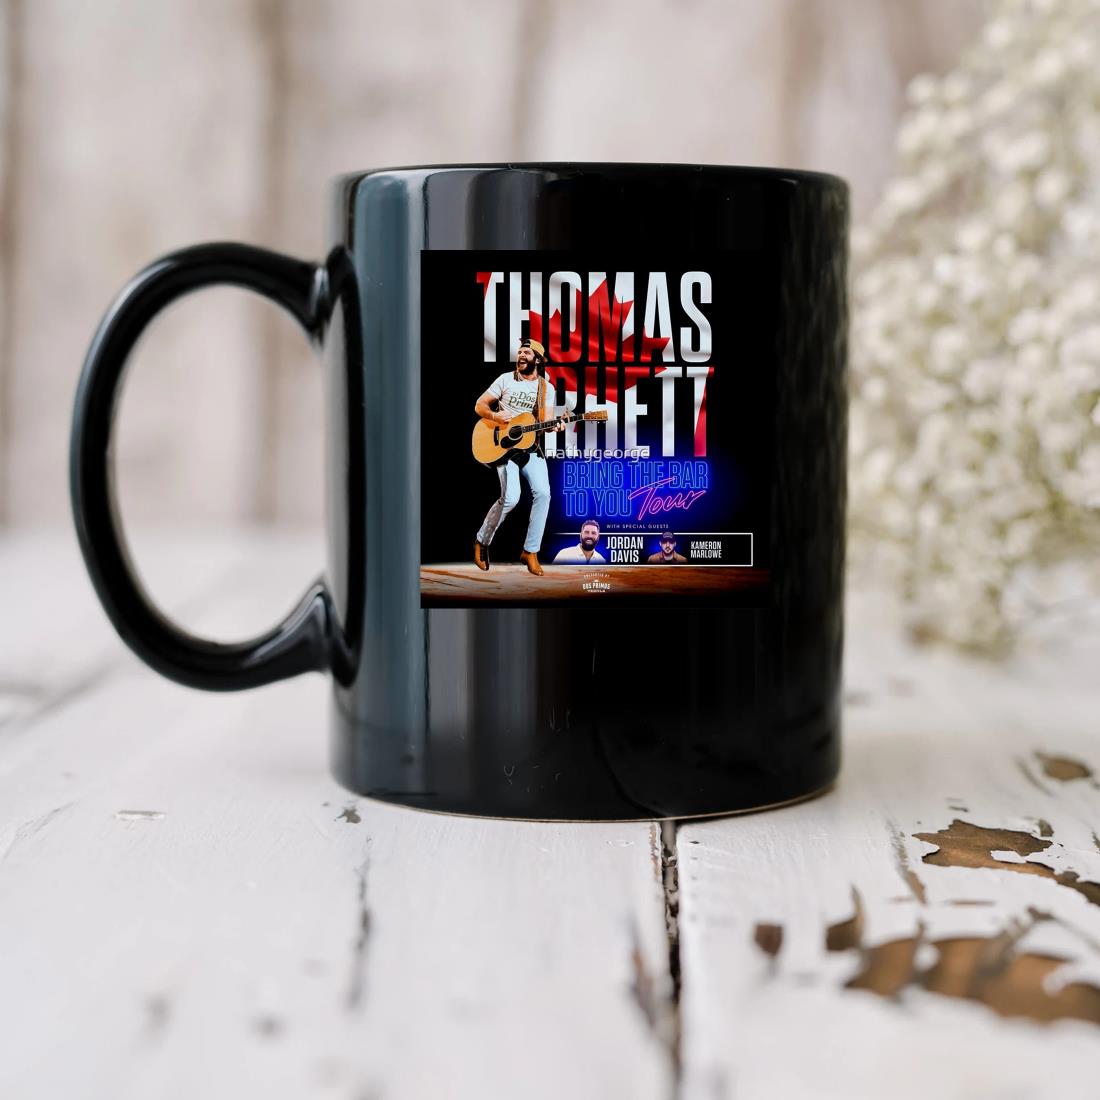 Thomas Rhett Bring The Bar To You Tour Mug